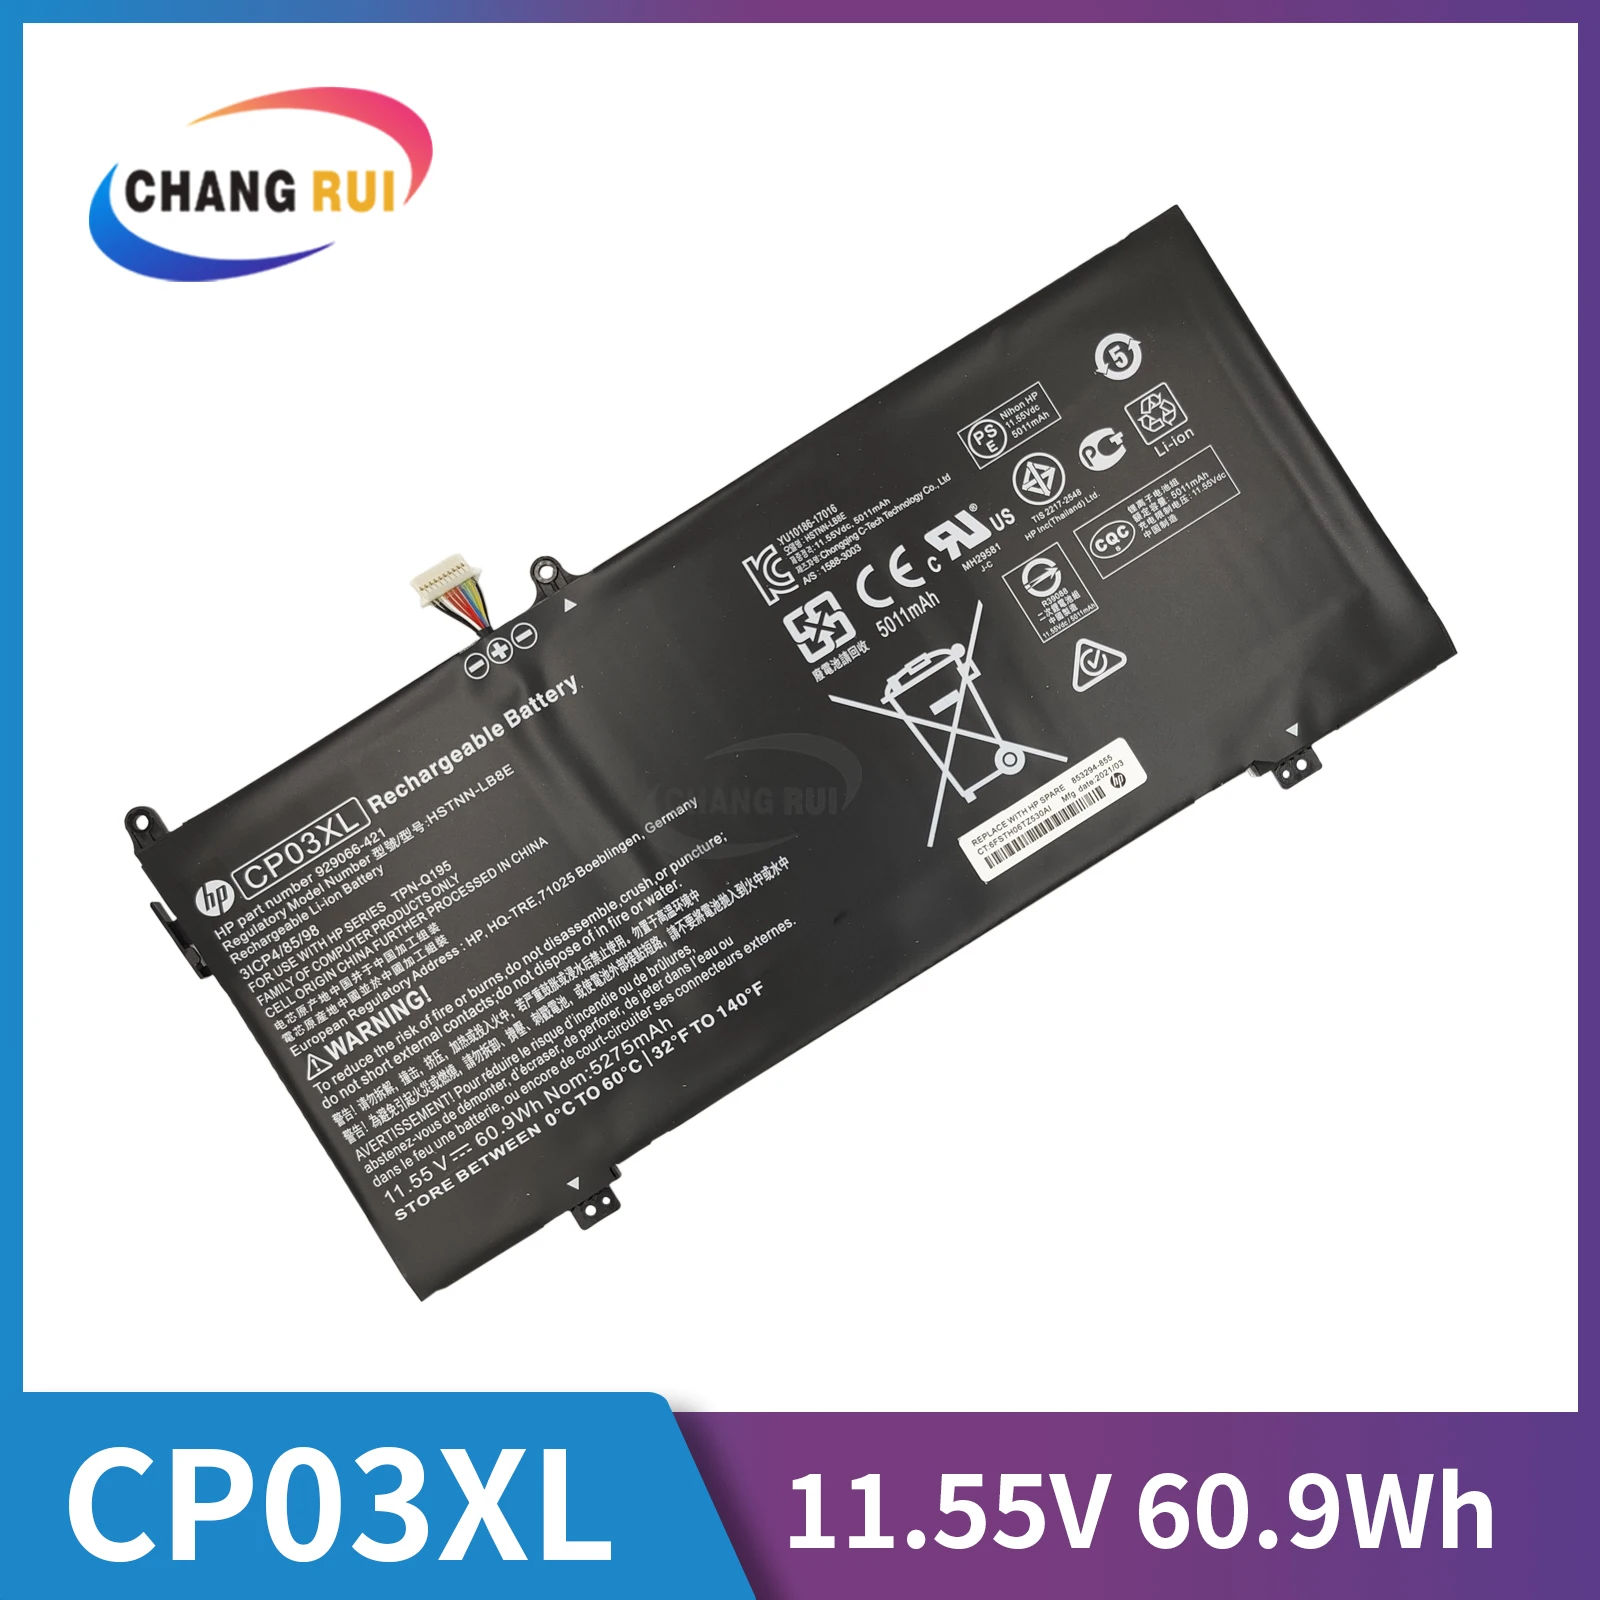 

CP03XL 60Wh Laptop Battery for HP Spectre 13-ae x360 929072-855 CP03060XL Genuine Original Li-ion Battery